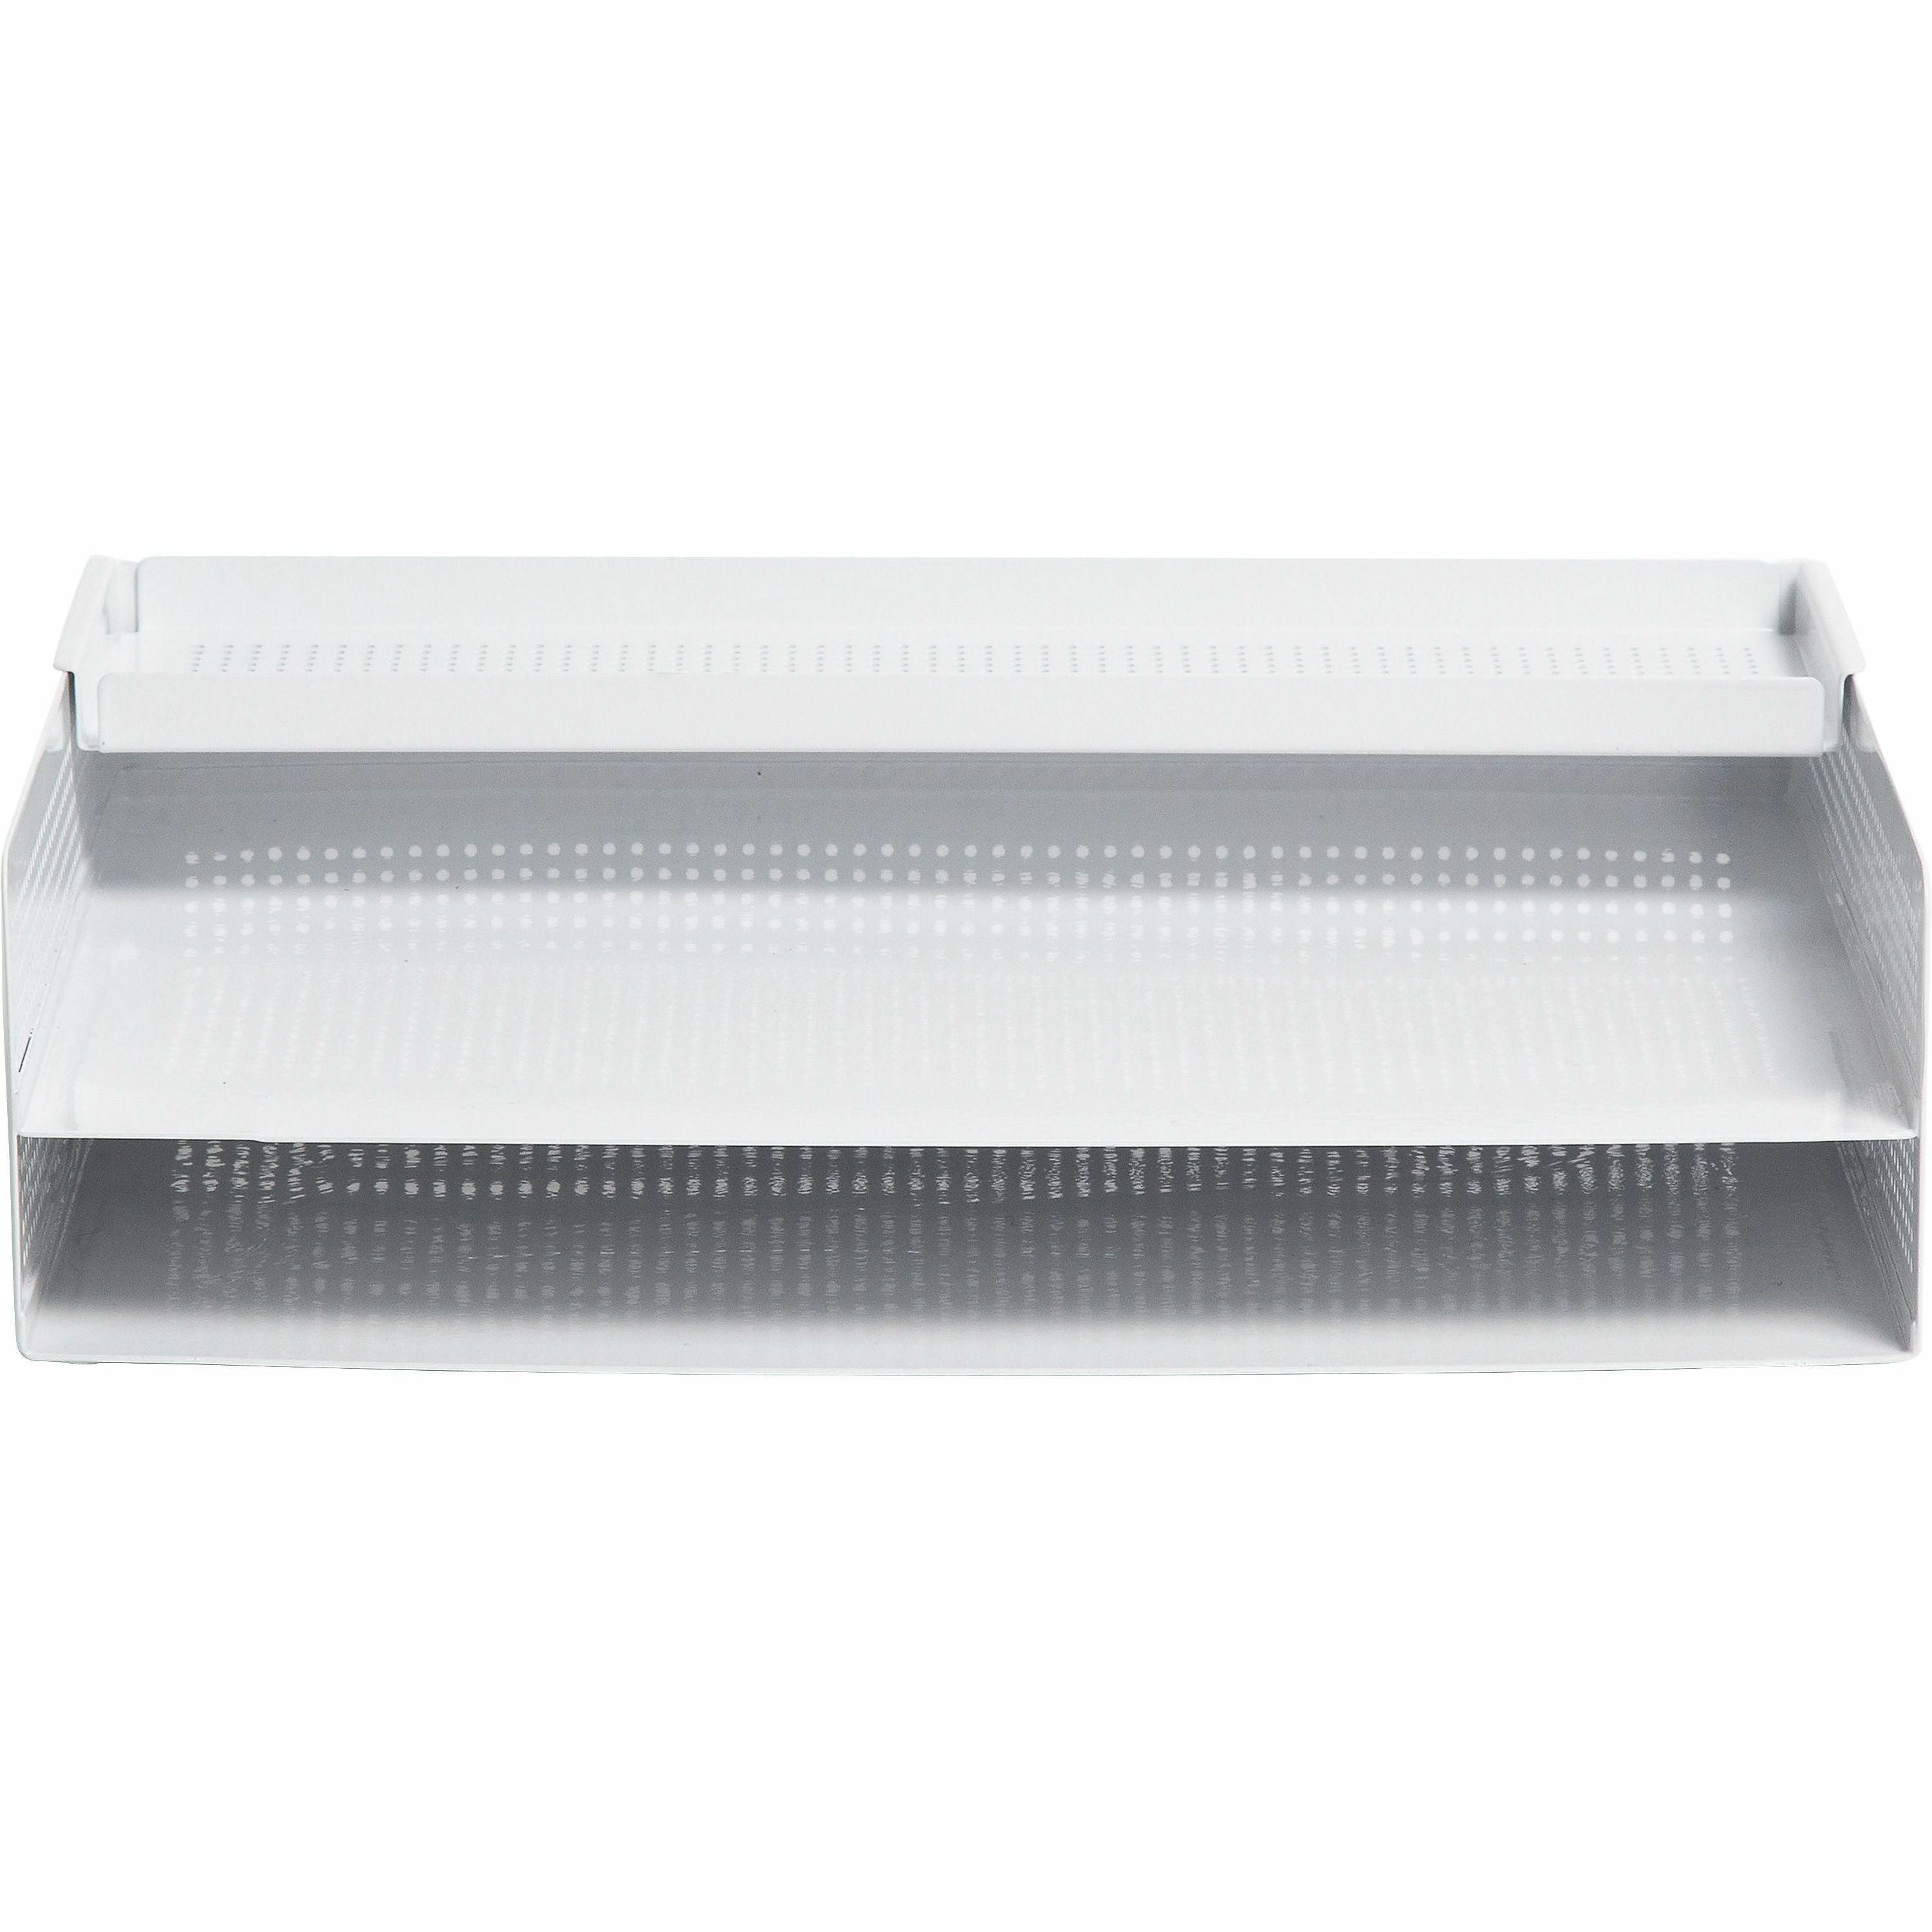 u-brands-perforated-paper-tray-durable-white-metal-1-each_ubr5718u0106 - 2